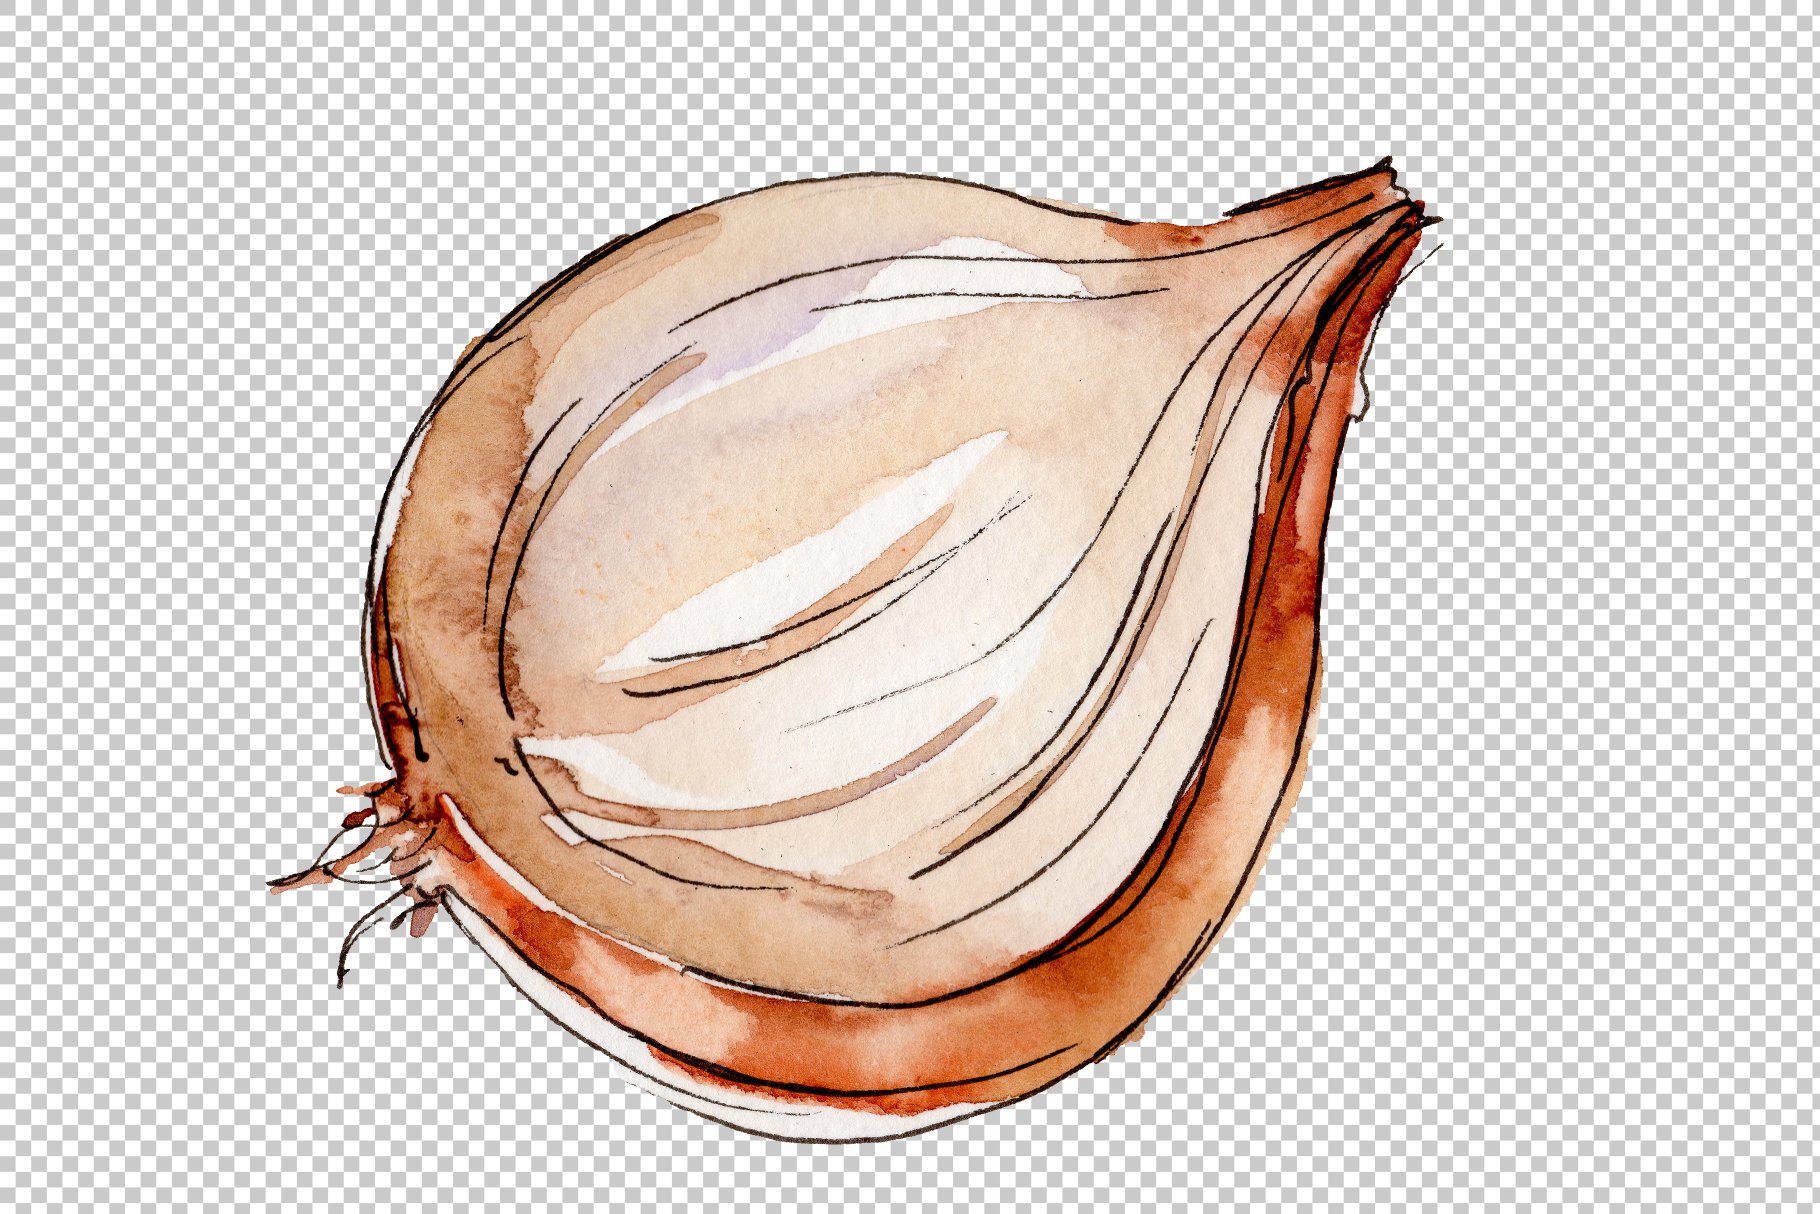 Half of onion.